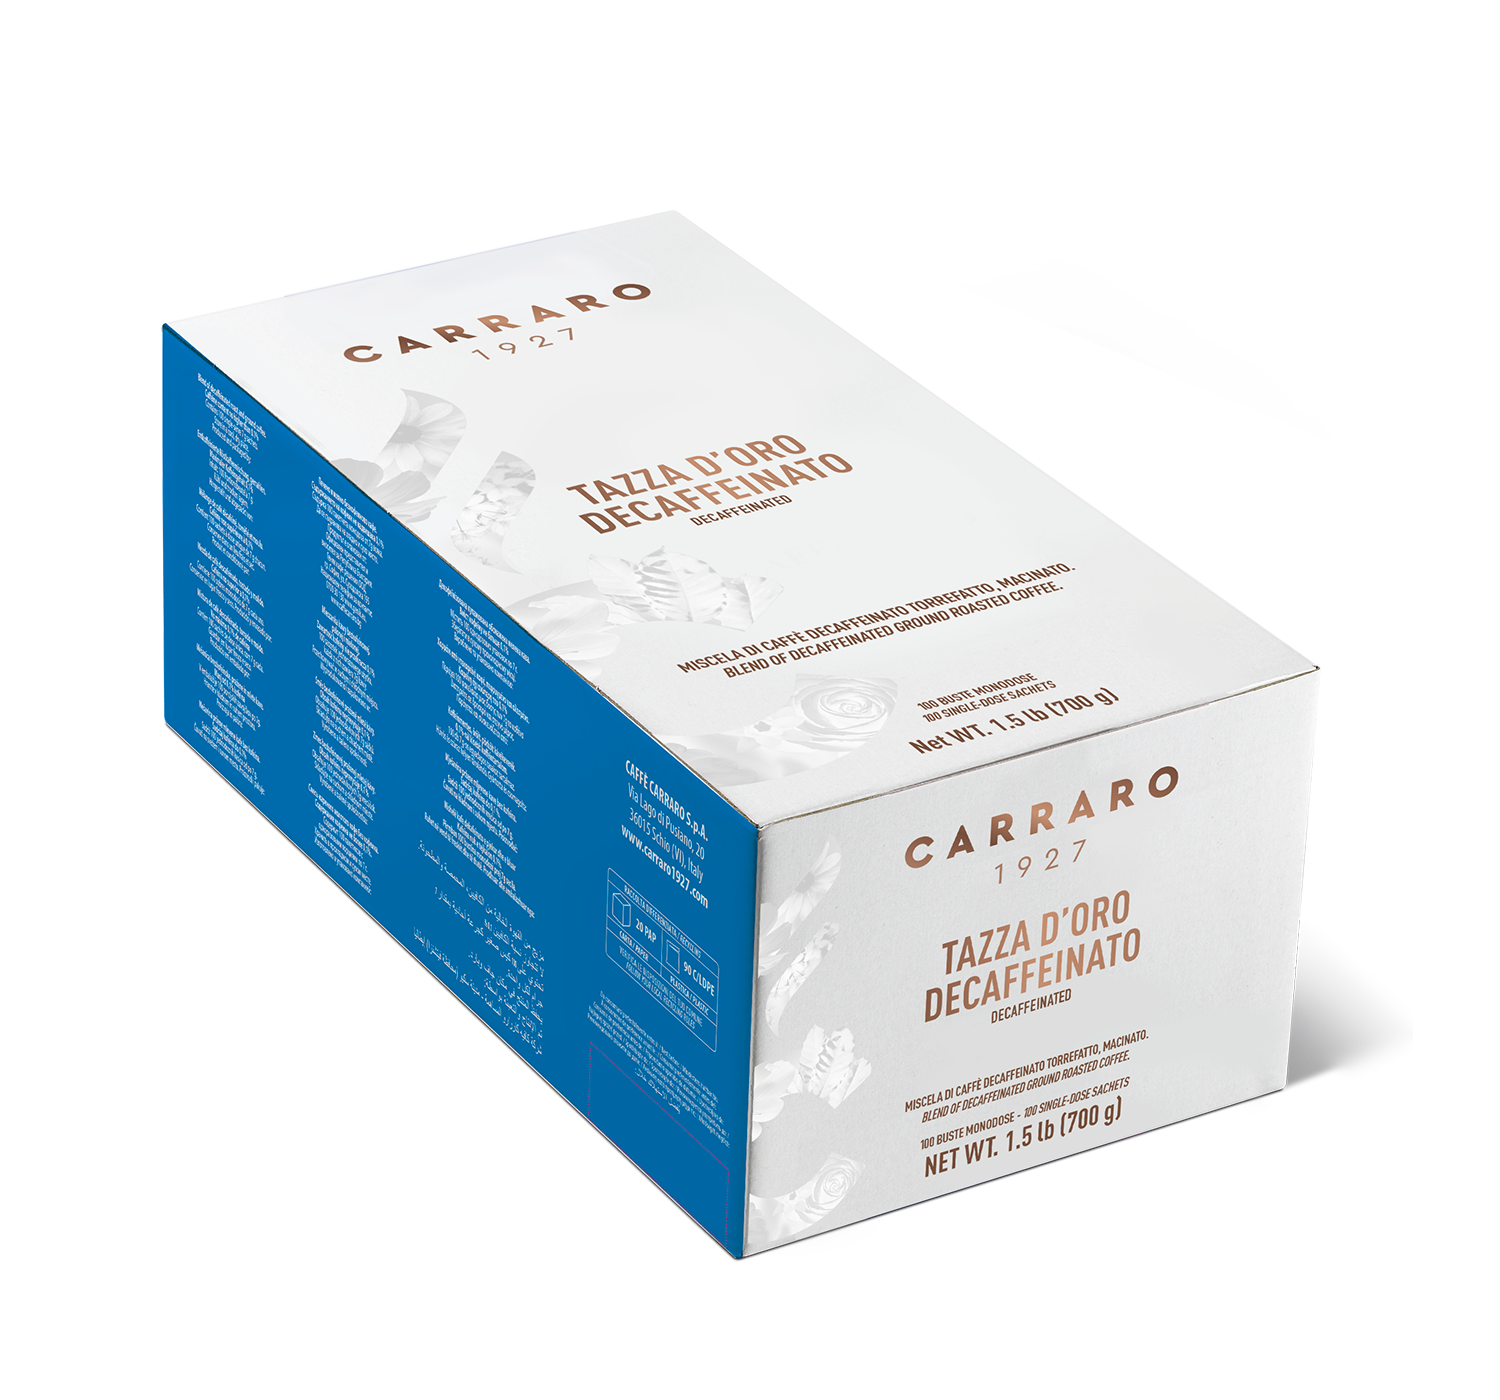 Caffé macinato - Tazza d’Oro decaffeinato – astuccio con 100 buste monodose - Shop online Caffè Carraro